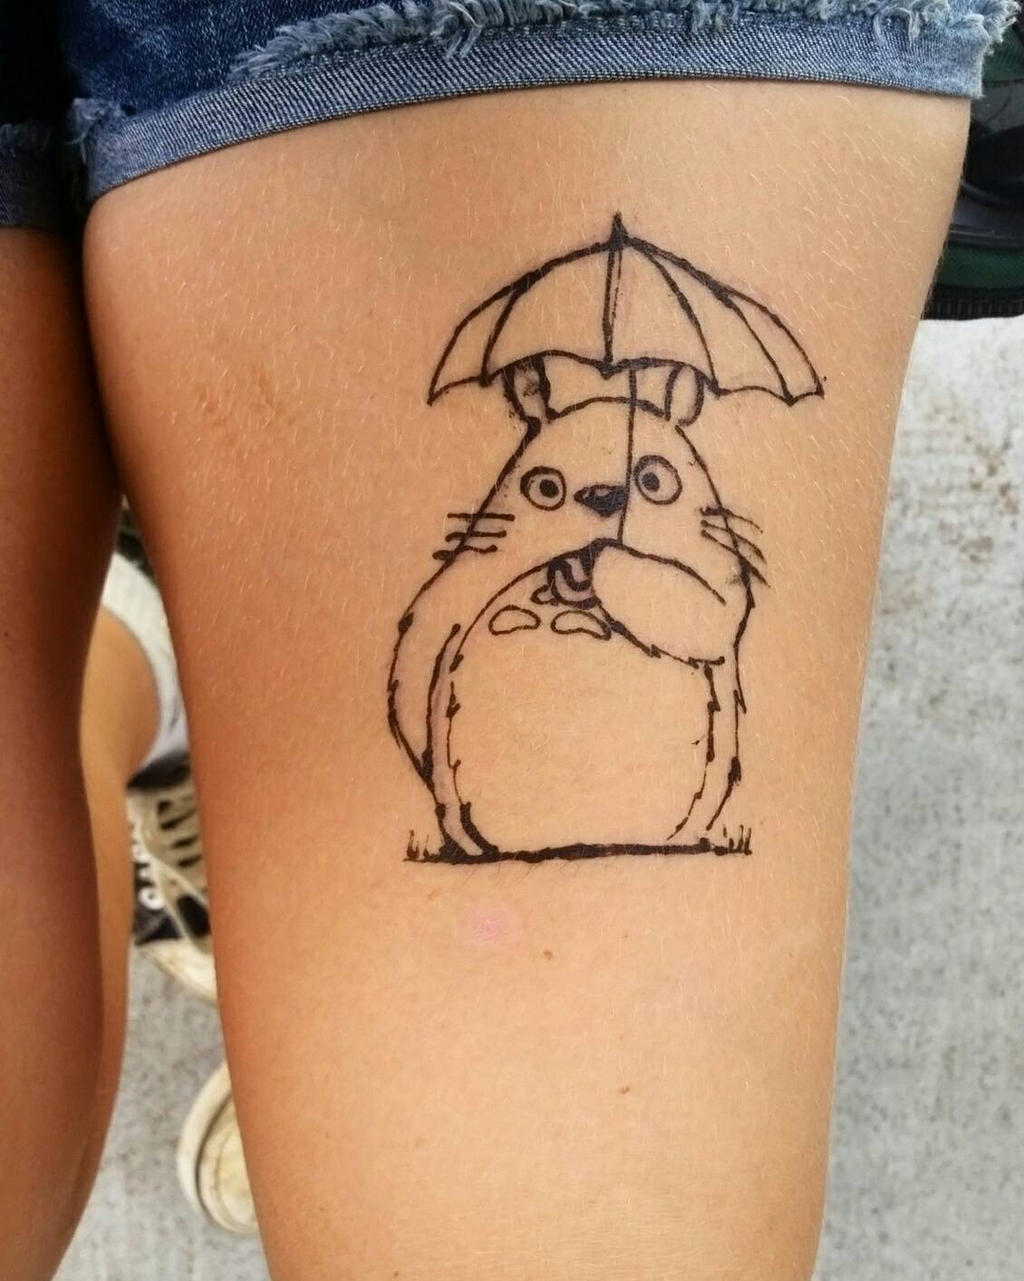 Totoro Henna Tattoo By Gummigator On Deviantart